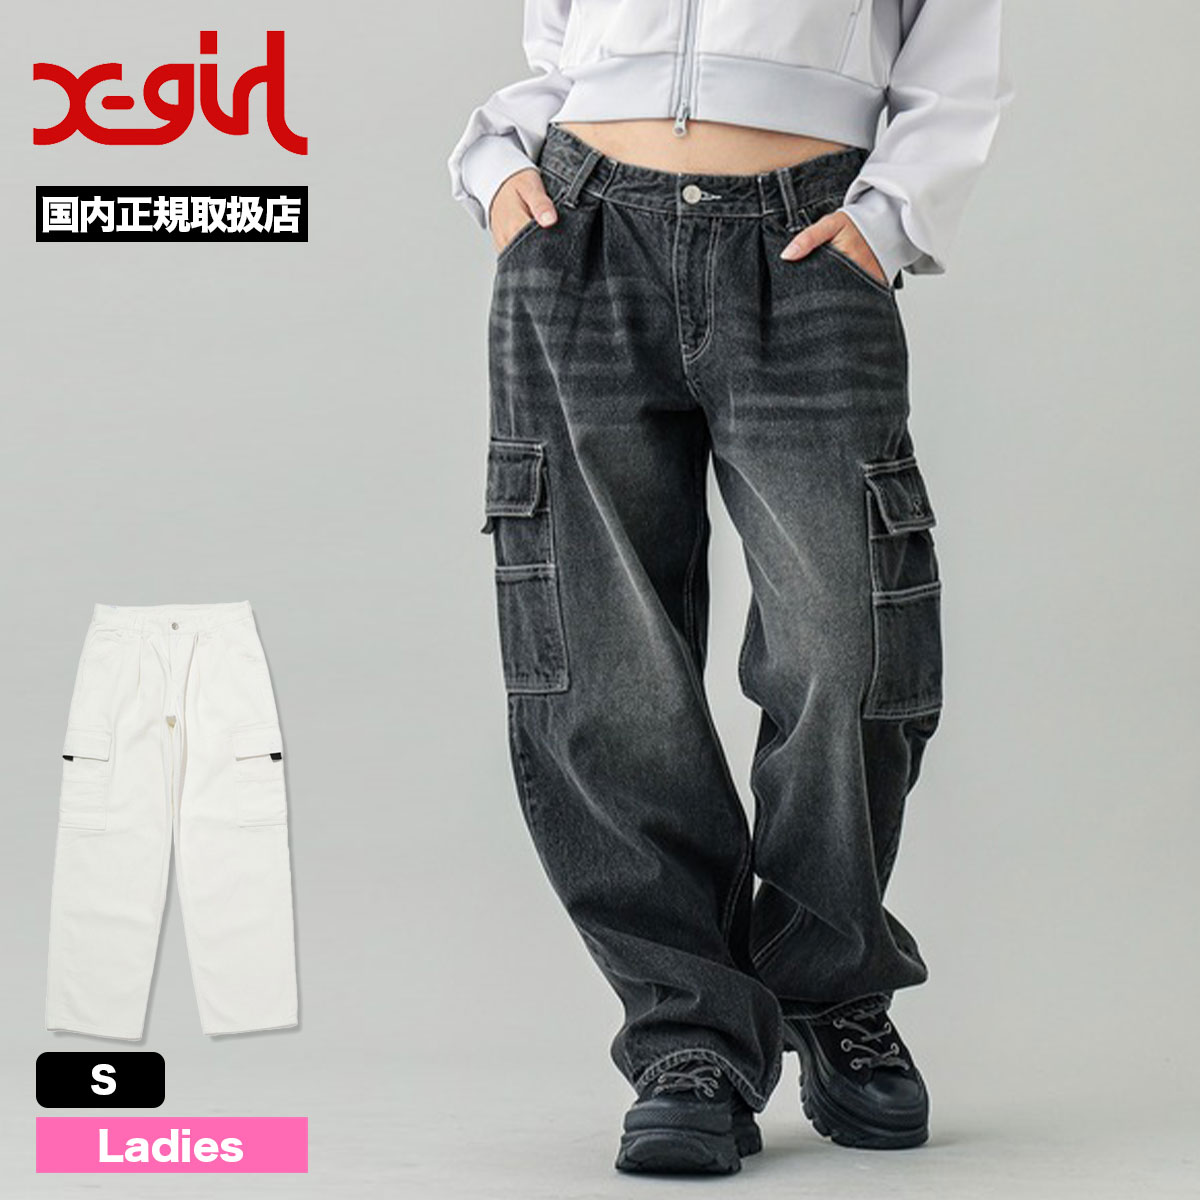 Plain Regular Fit Men Cargo Jeans, Black at Rs 360/piece in